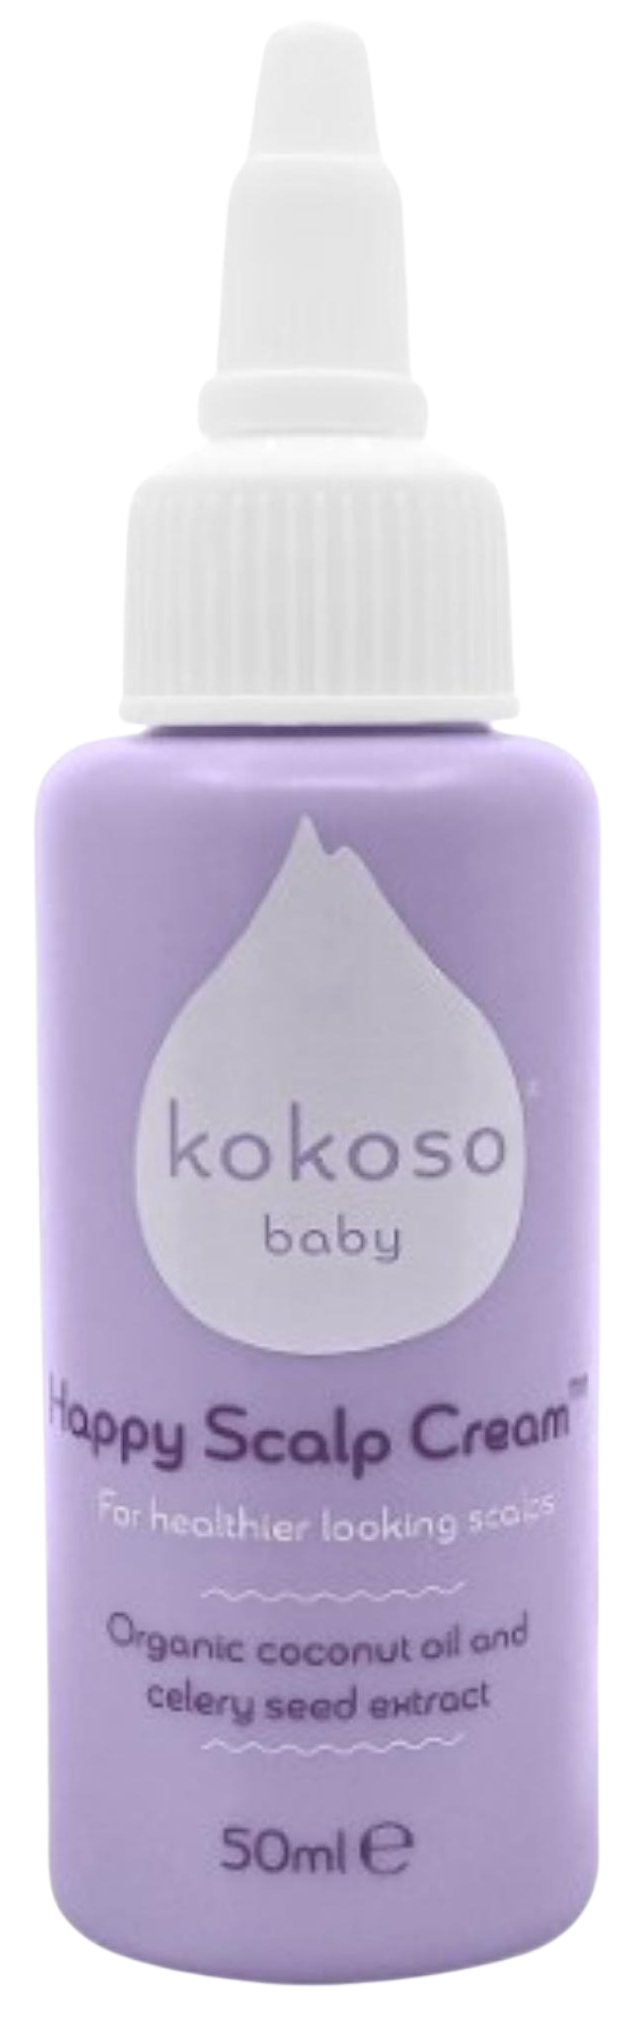 Kokoso baby Happy Scalp Cream, 50 ml